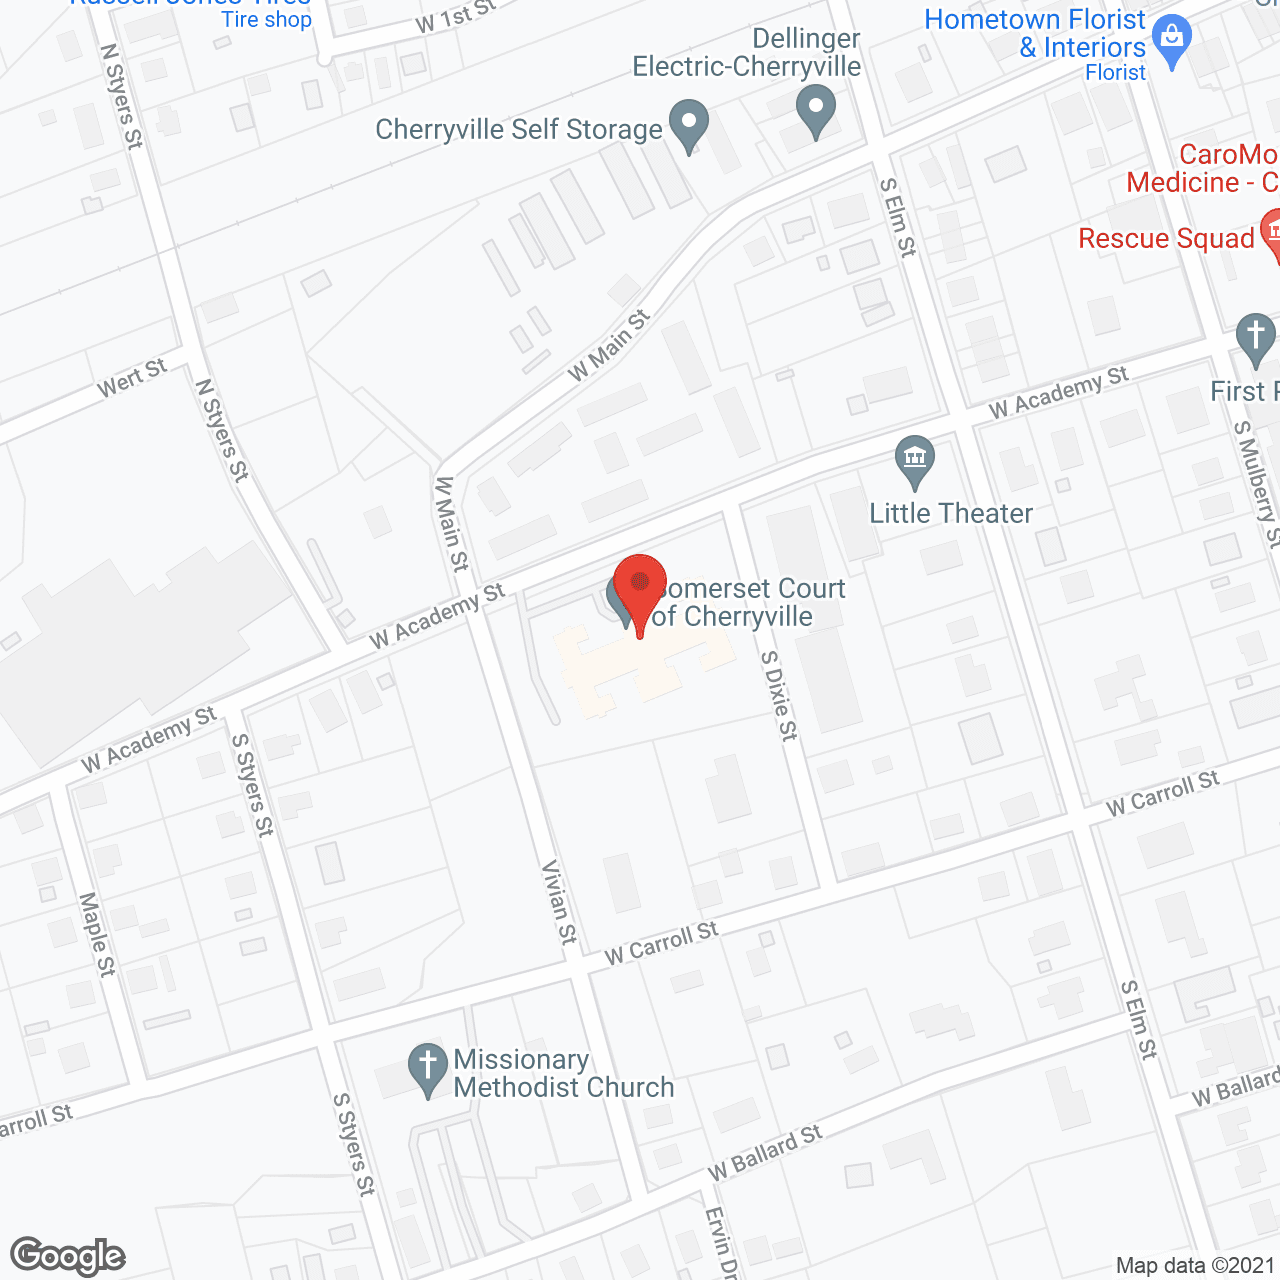 Somerset Court of Cherryville in google map